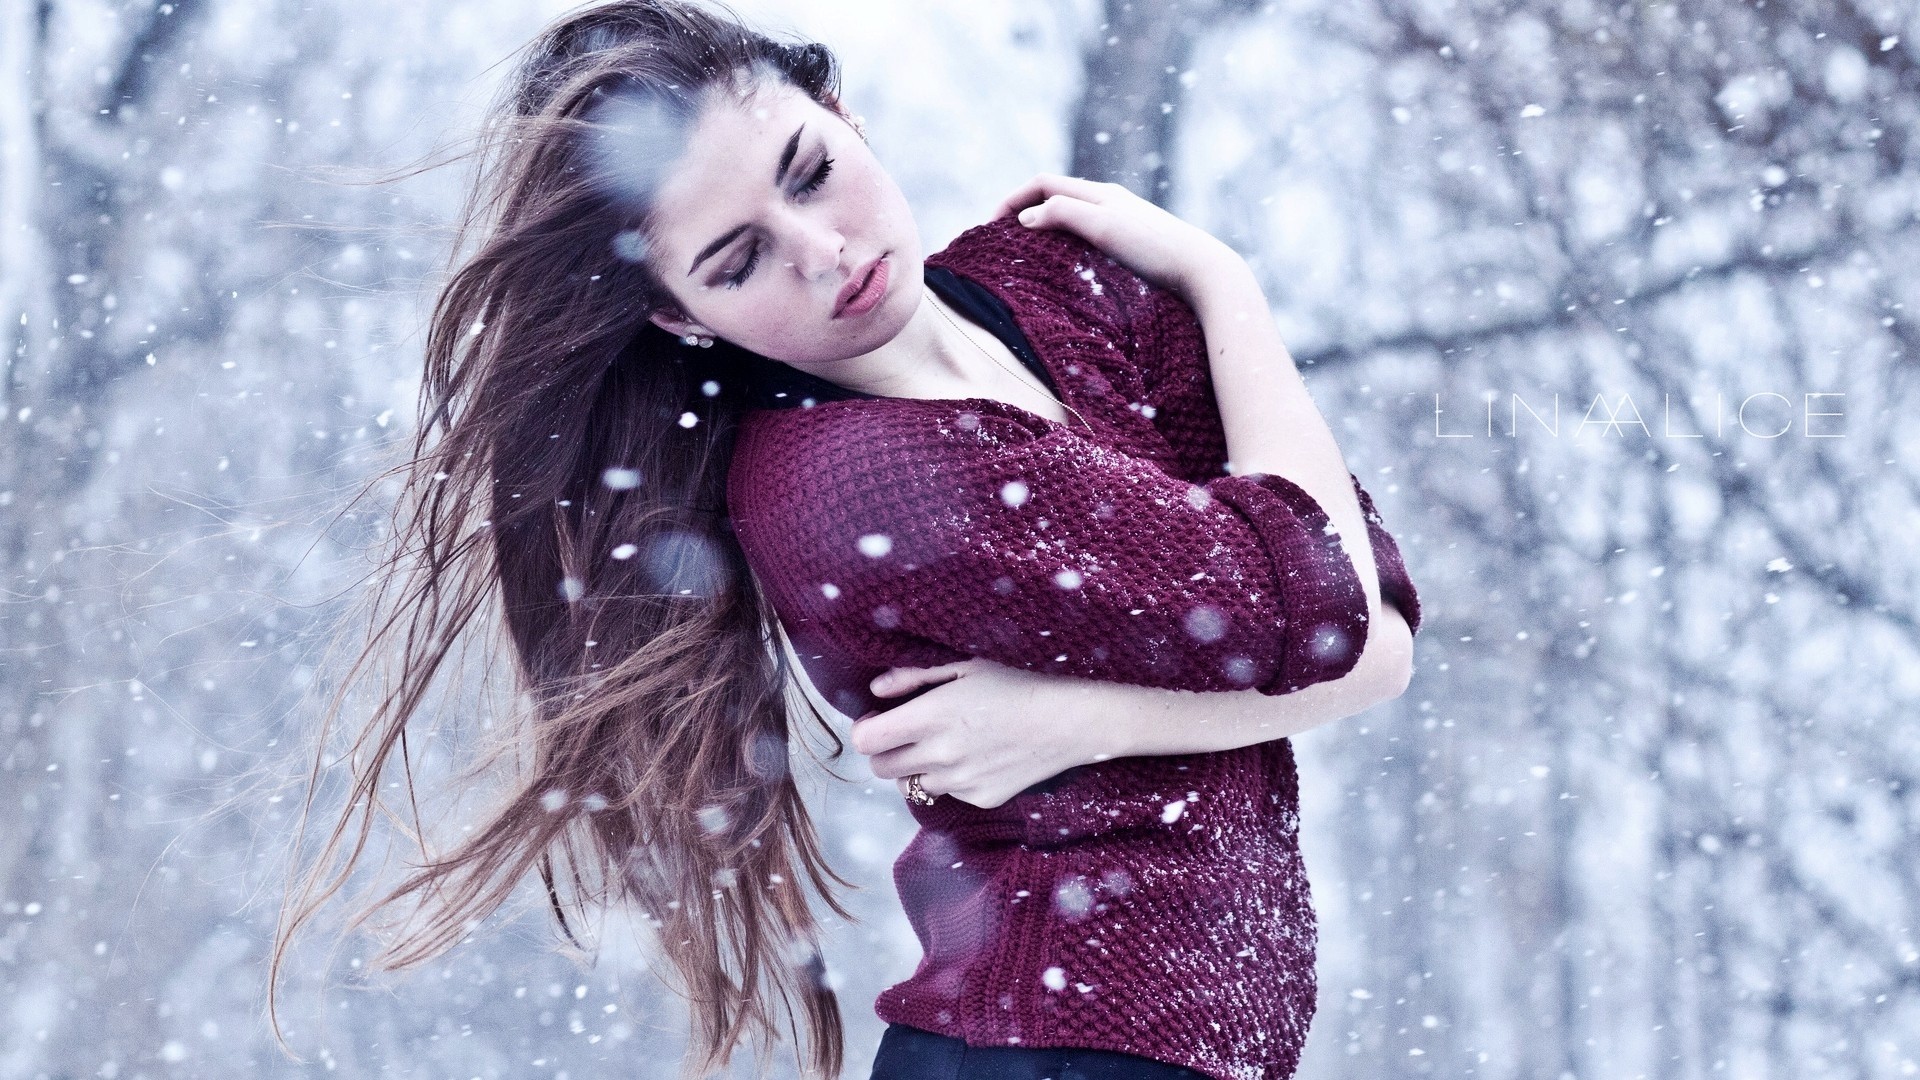 Women Women Winter Lina Sweater Snow Model Women Outdoors Cold Long Hair Closed Eyes Red Sweater 1920x1080